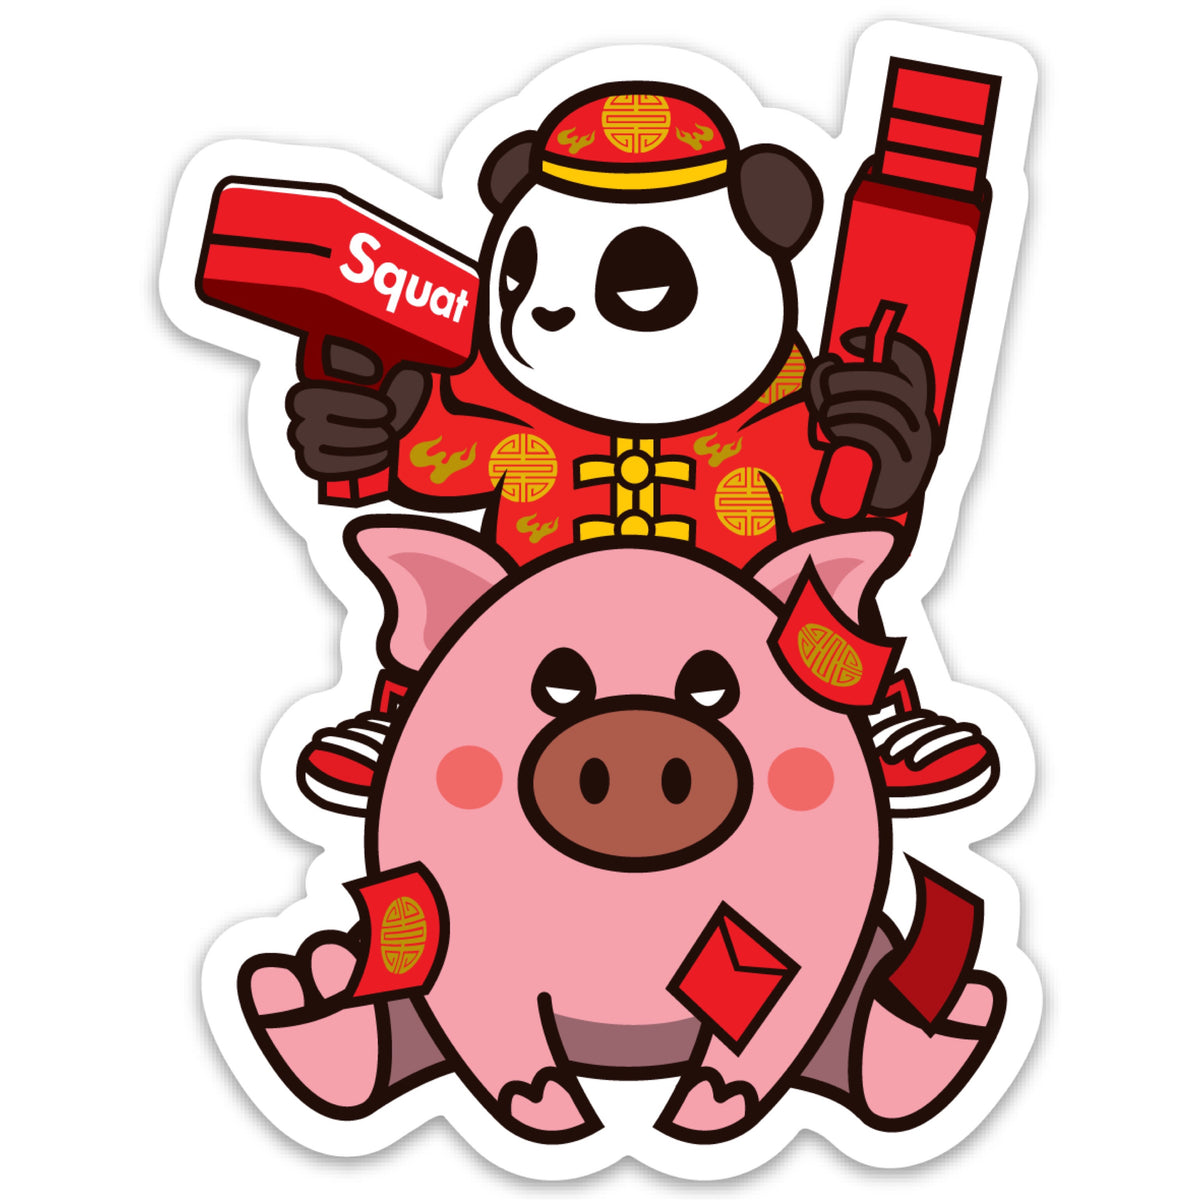 Porky Pig - Hypebeast Sticker! (Not Supreme) on Behance